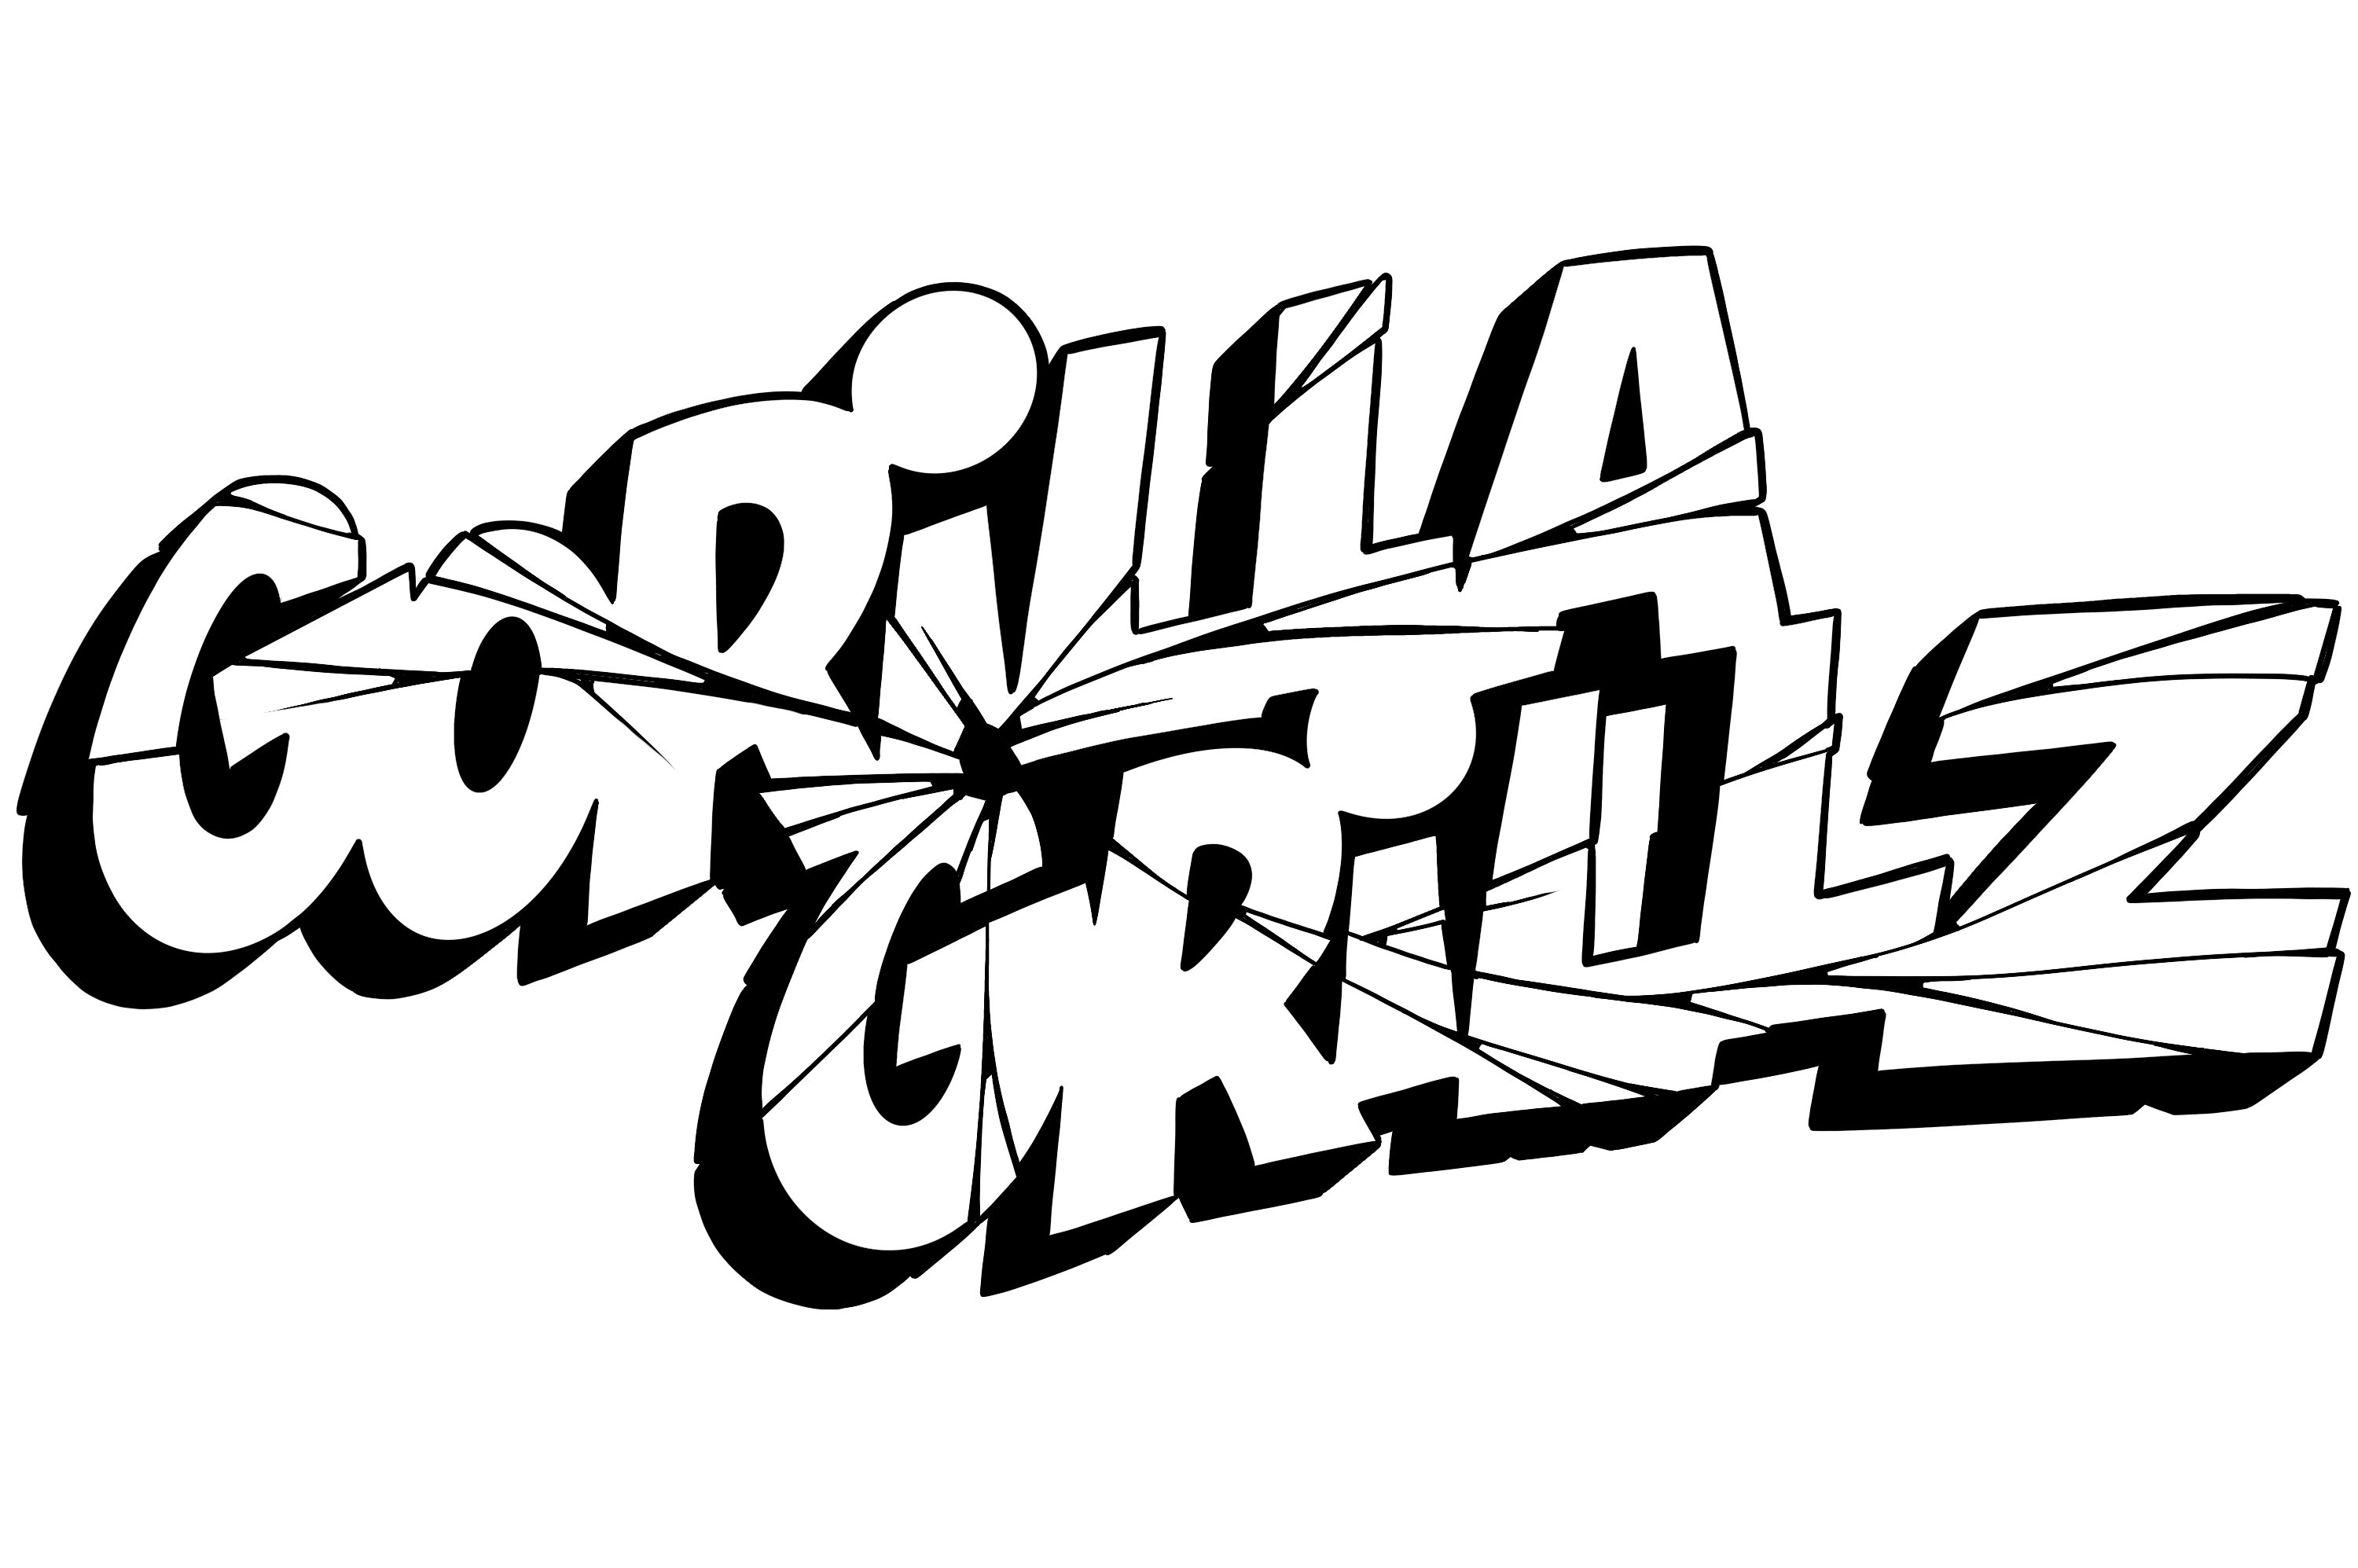 Gorilla Grillz - CBD de máxima calidad - Comprar CBD online